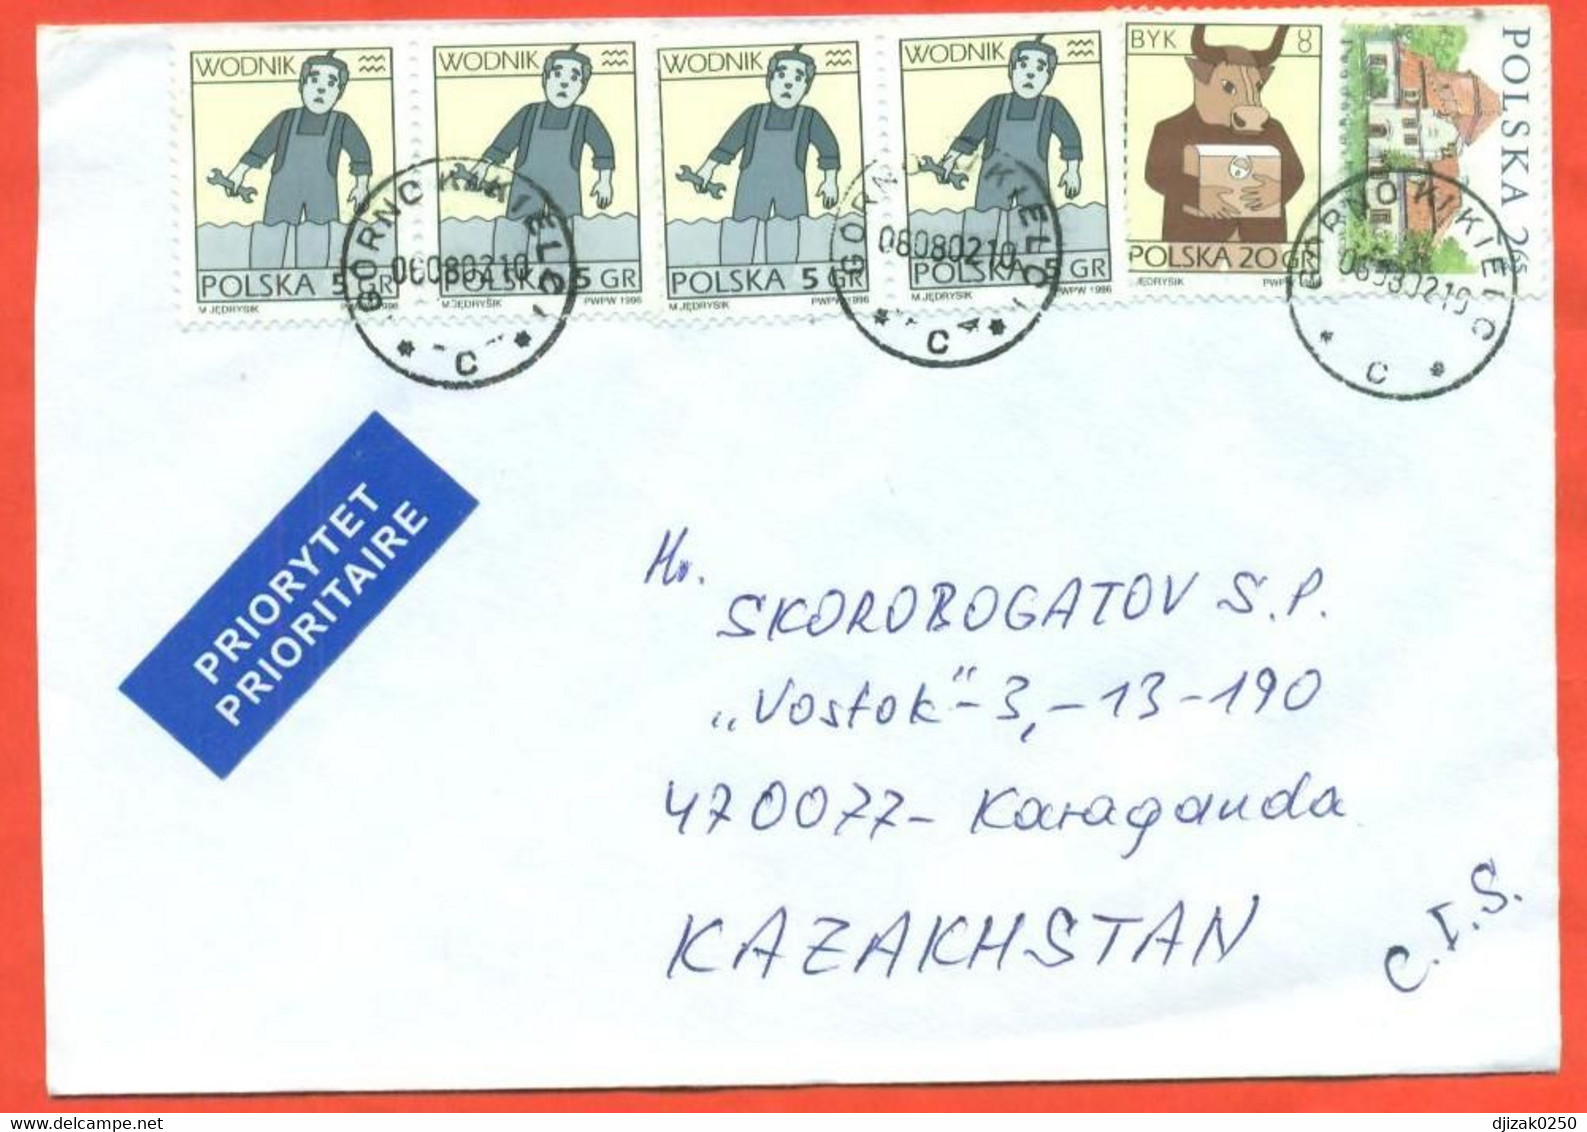 Poland 2002. The Envelope  Passed Through The Mail. Airmail. - Cartas & Documentos